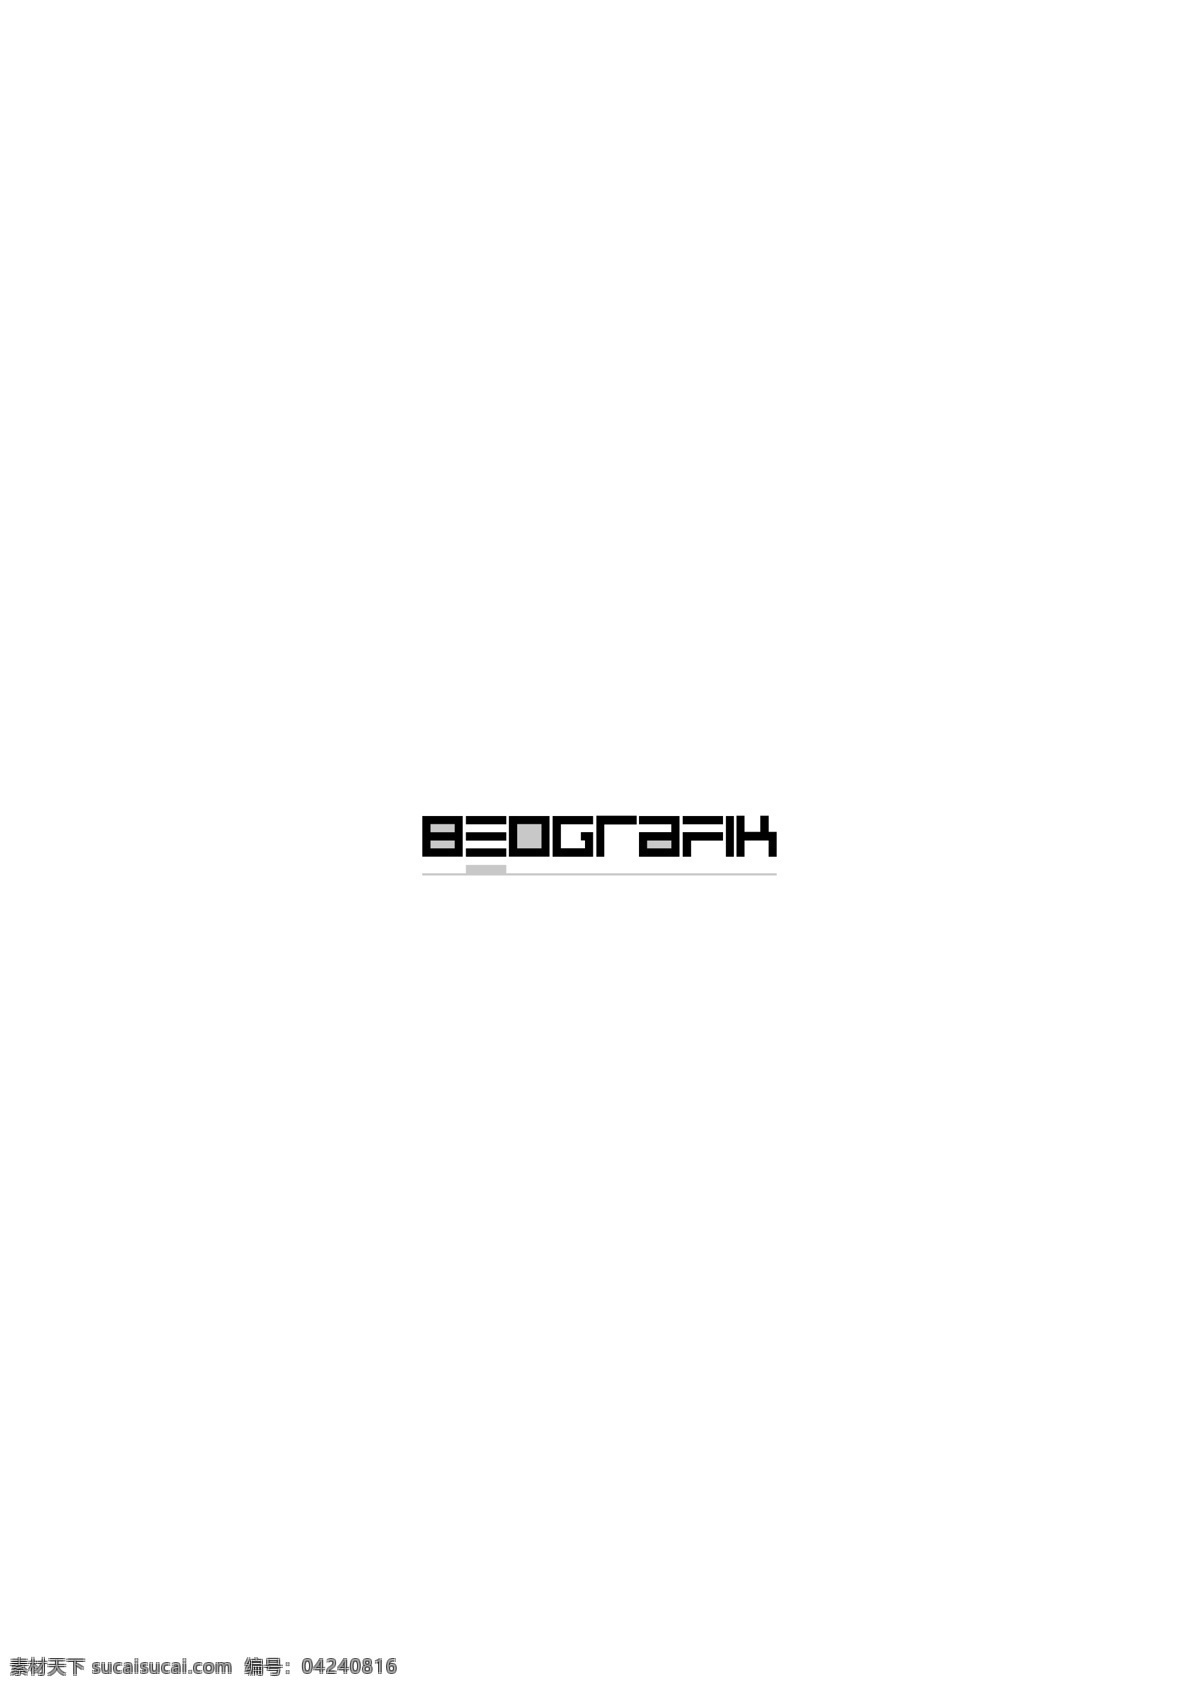 beografik logo 设计欣赏 制造业 标志 标志设计 欣赏 矢量下载 网页矢量 商业矢量 logo大全 红色